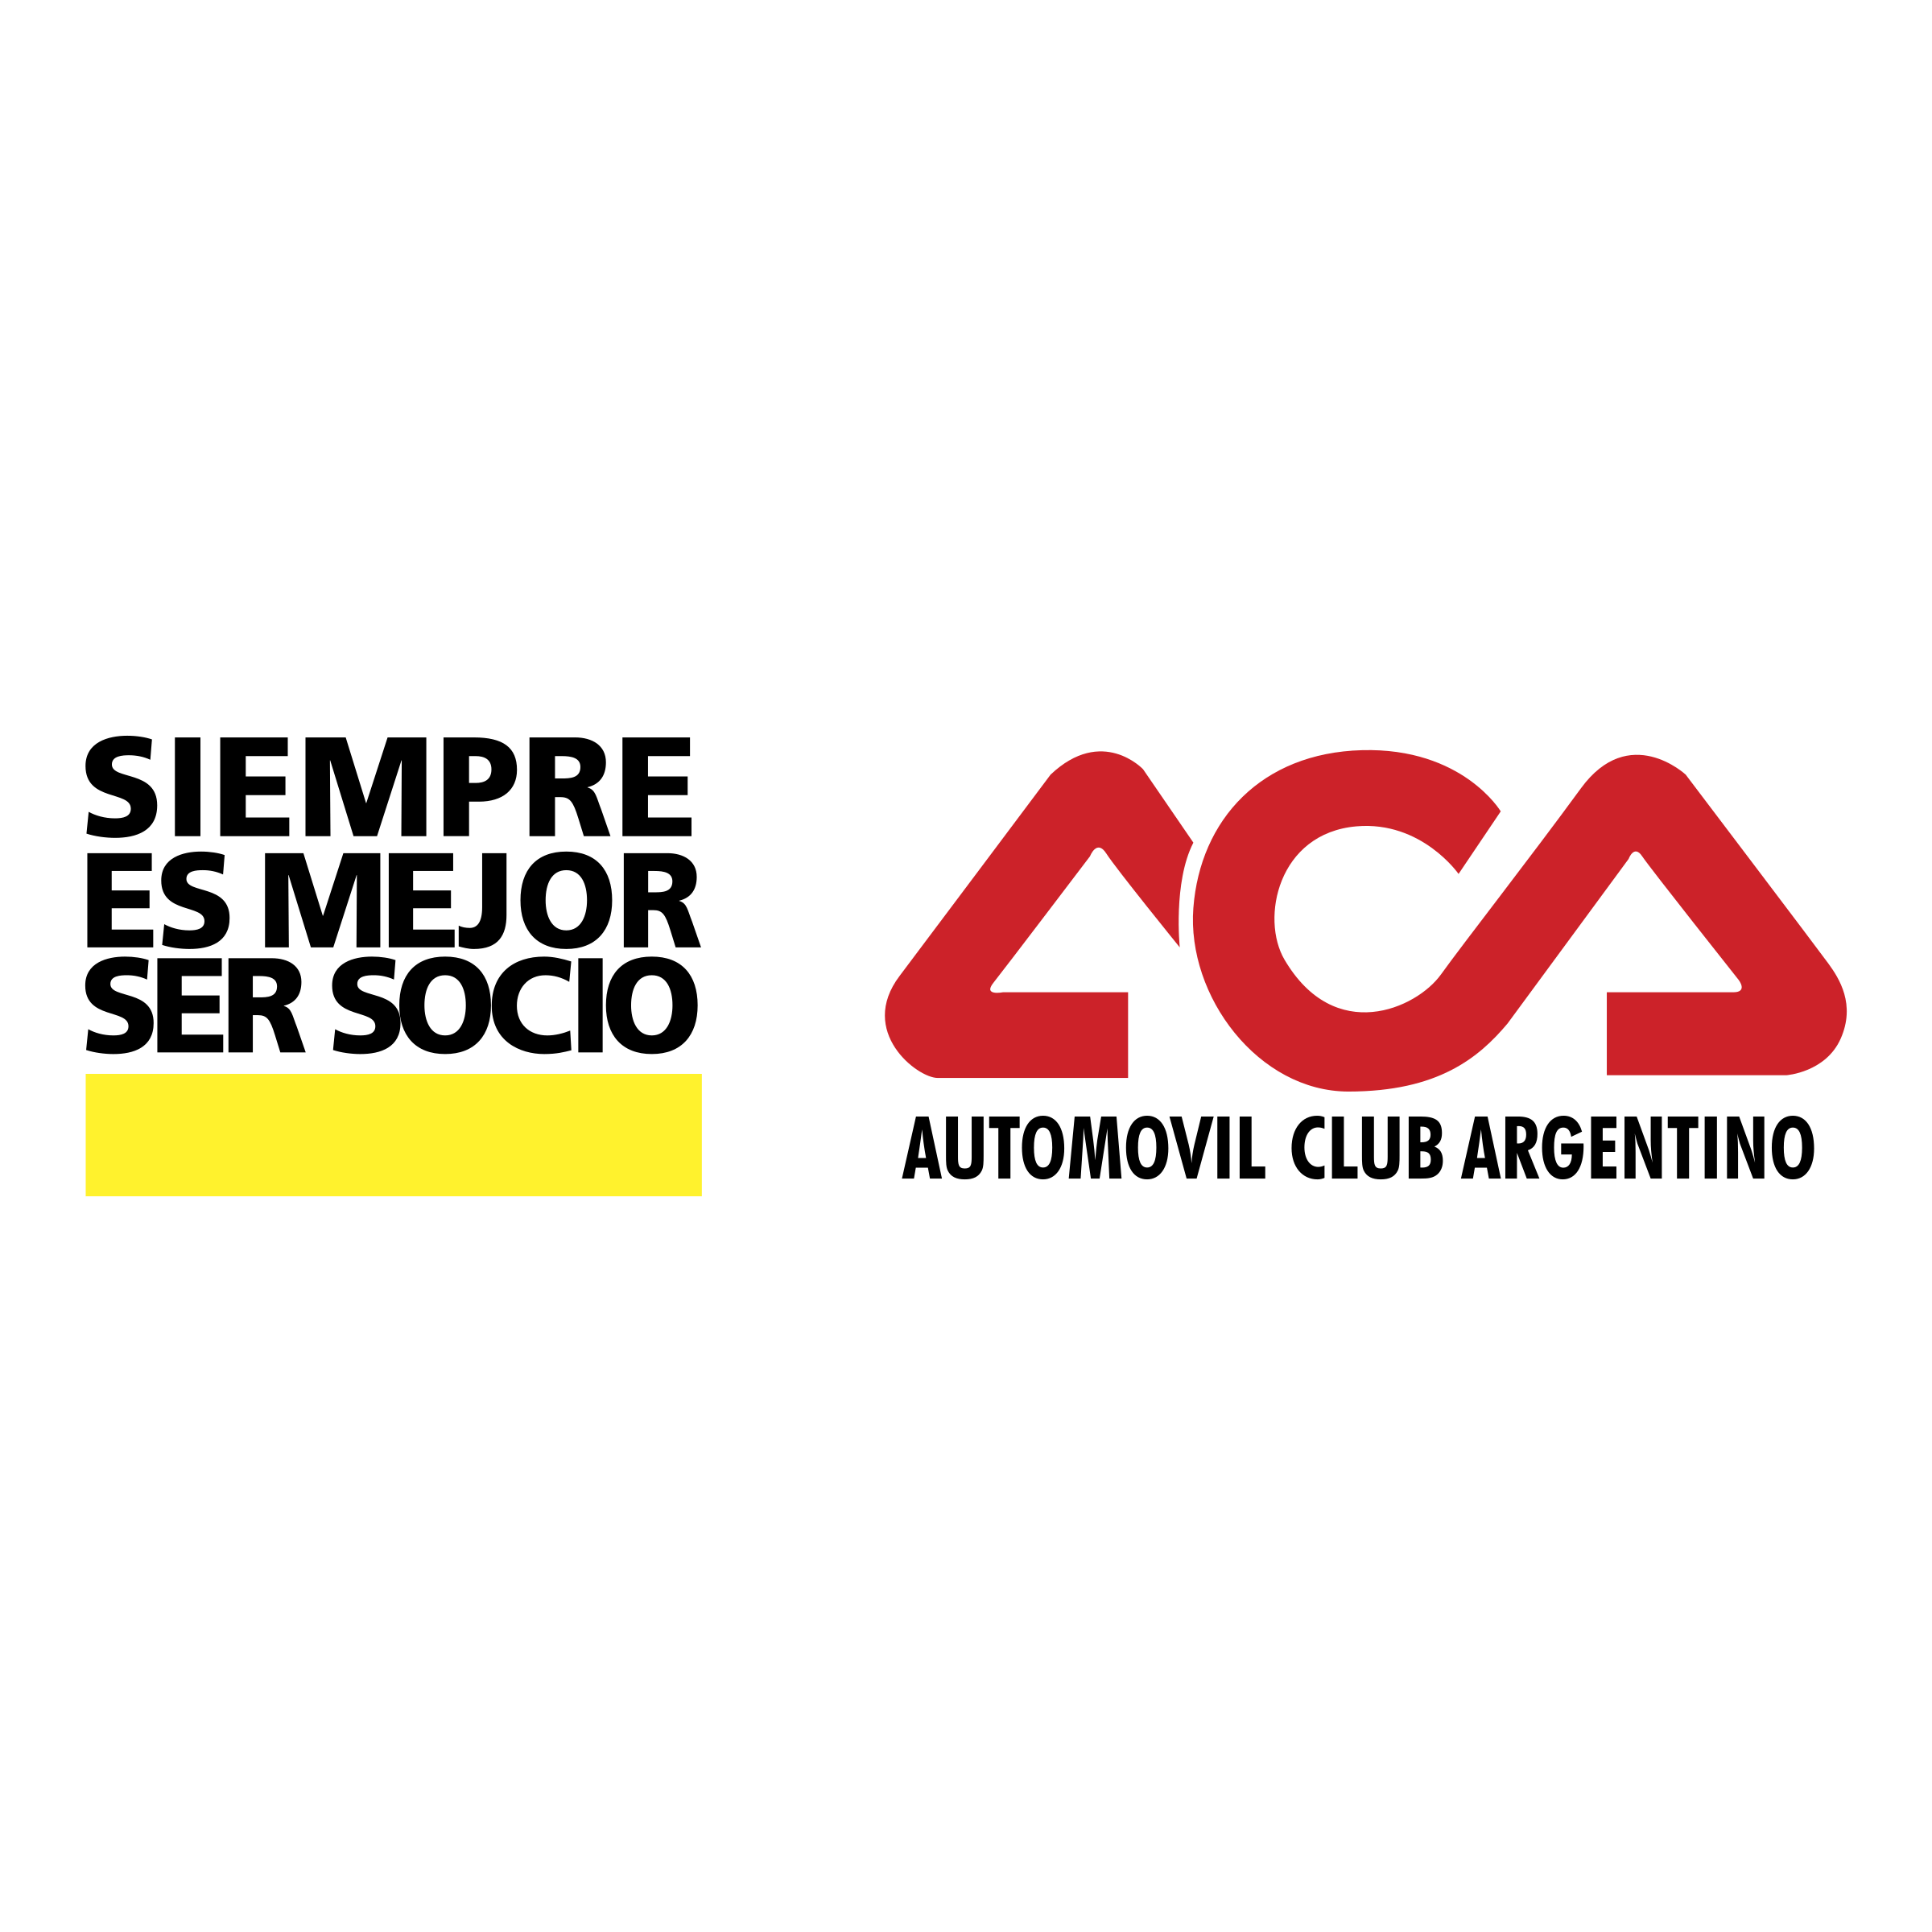 ACA Logo - ACA Logo PNG Transparent & SVG Vector - Freebie Supply